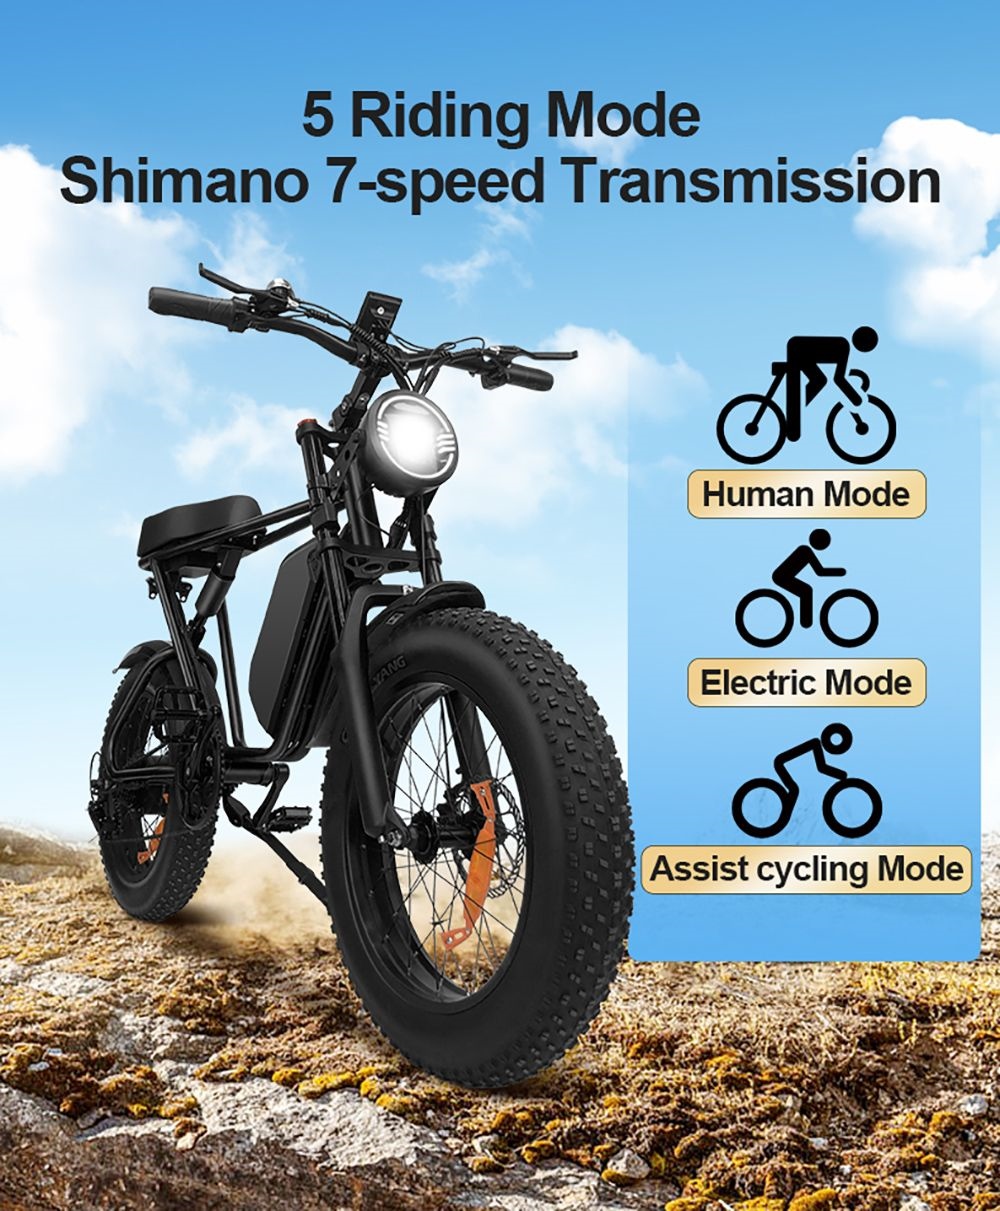 Q8 off-road elektrische fiets, 20 * 4 inch dikke band 1000 W motor 48 V 17.5 Ah batterij 55 km / u maximale snelheid 70 km maximaal bereik